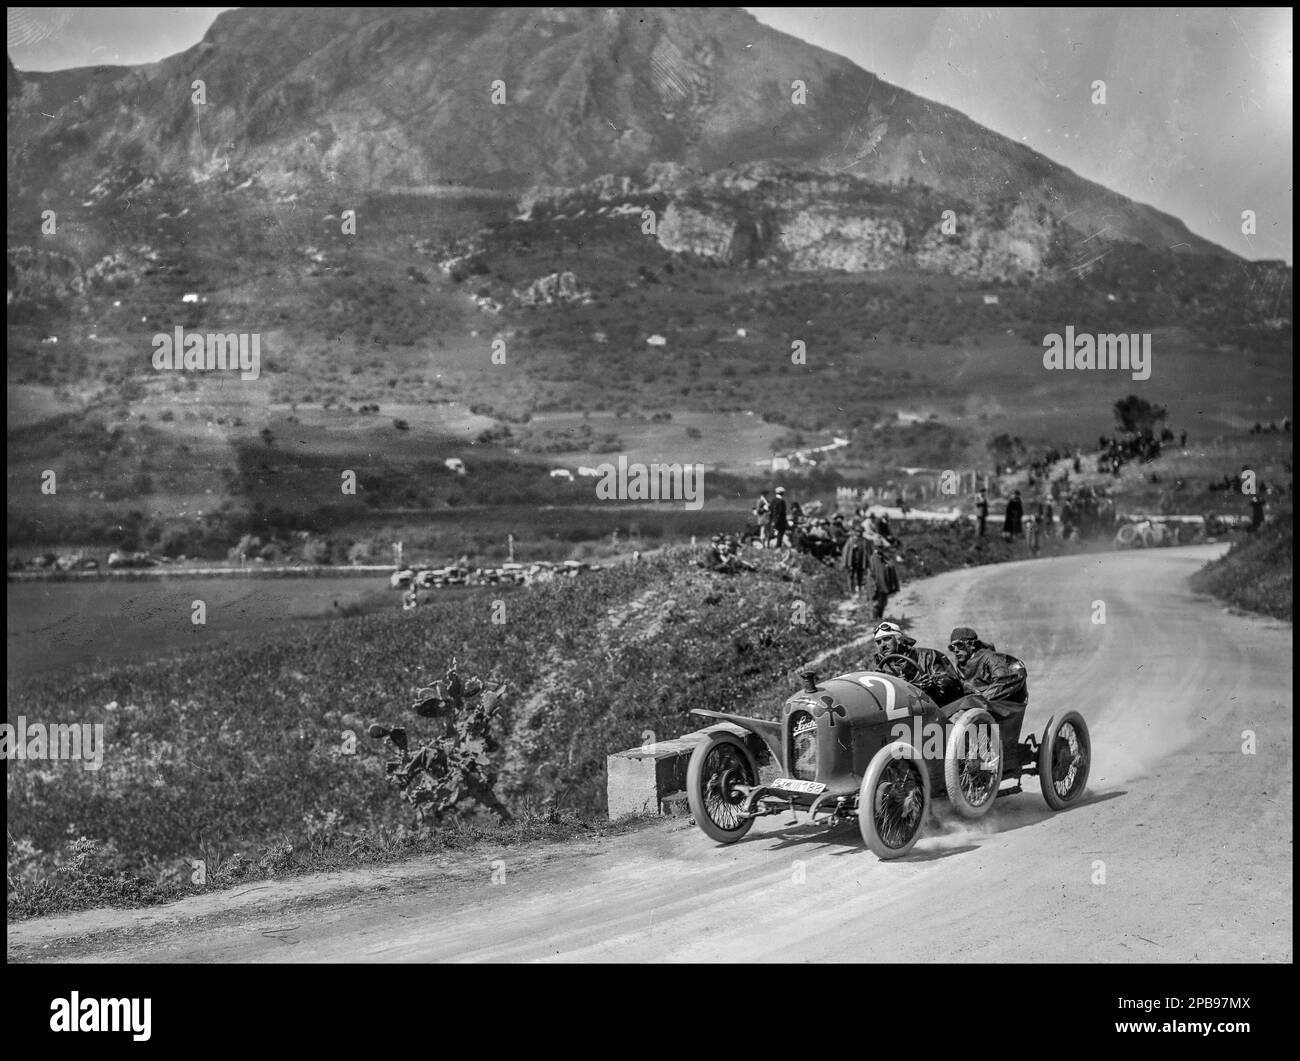 TARGA FLORIO Motor Race 1922 Lambert Pöcher in seinem Austro-Daimler beim Targa Florio Rough Track Racing 1922. 2. April 1922 Sizilien Italien Stockfoto